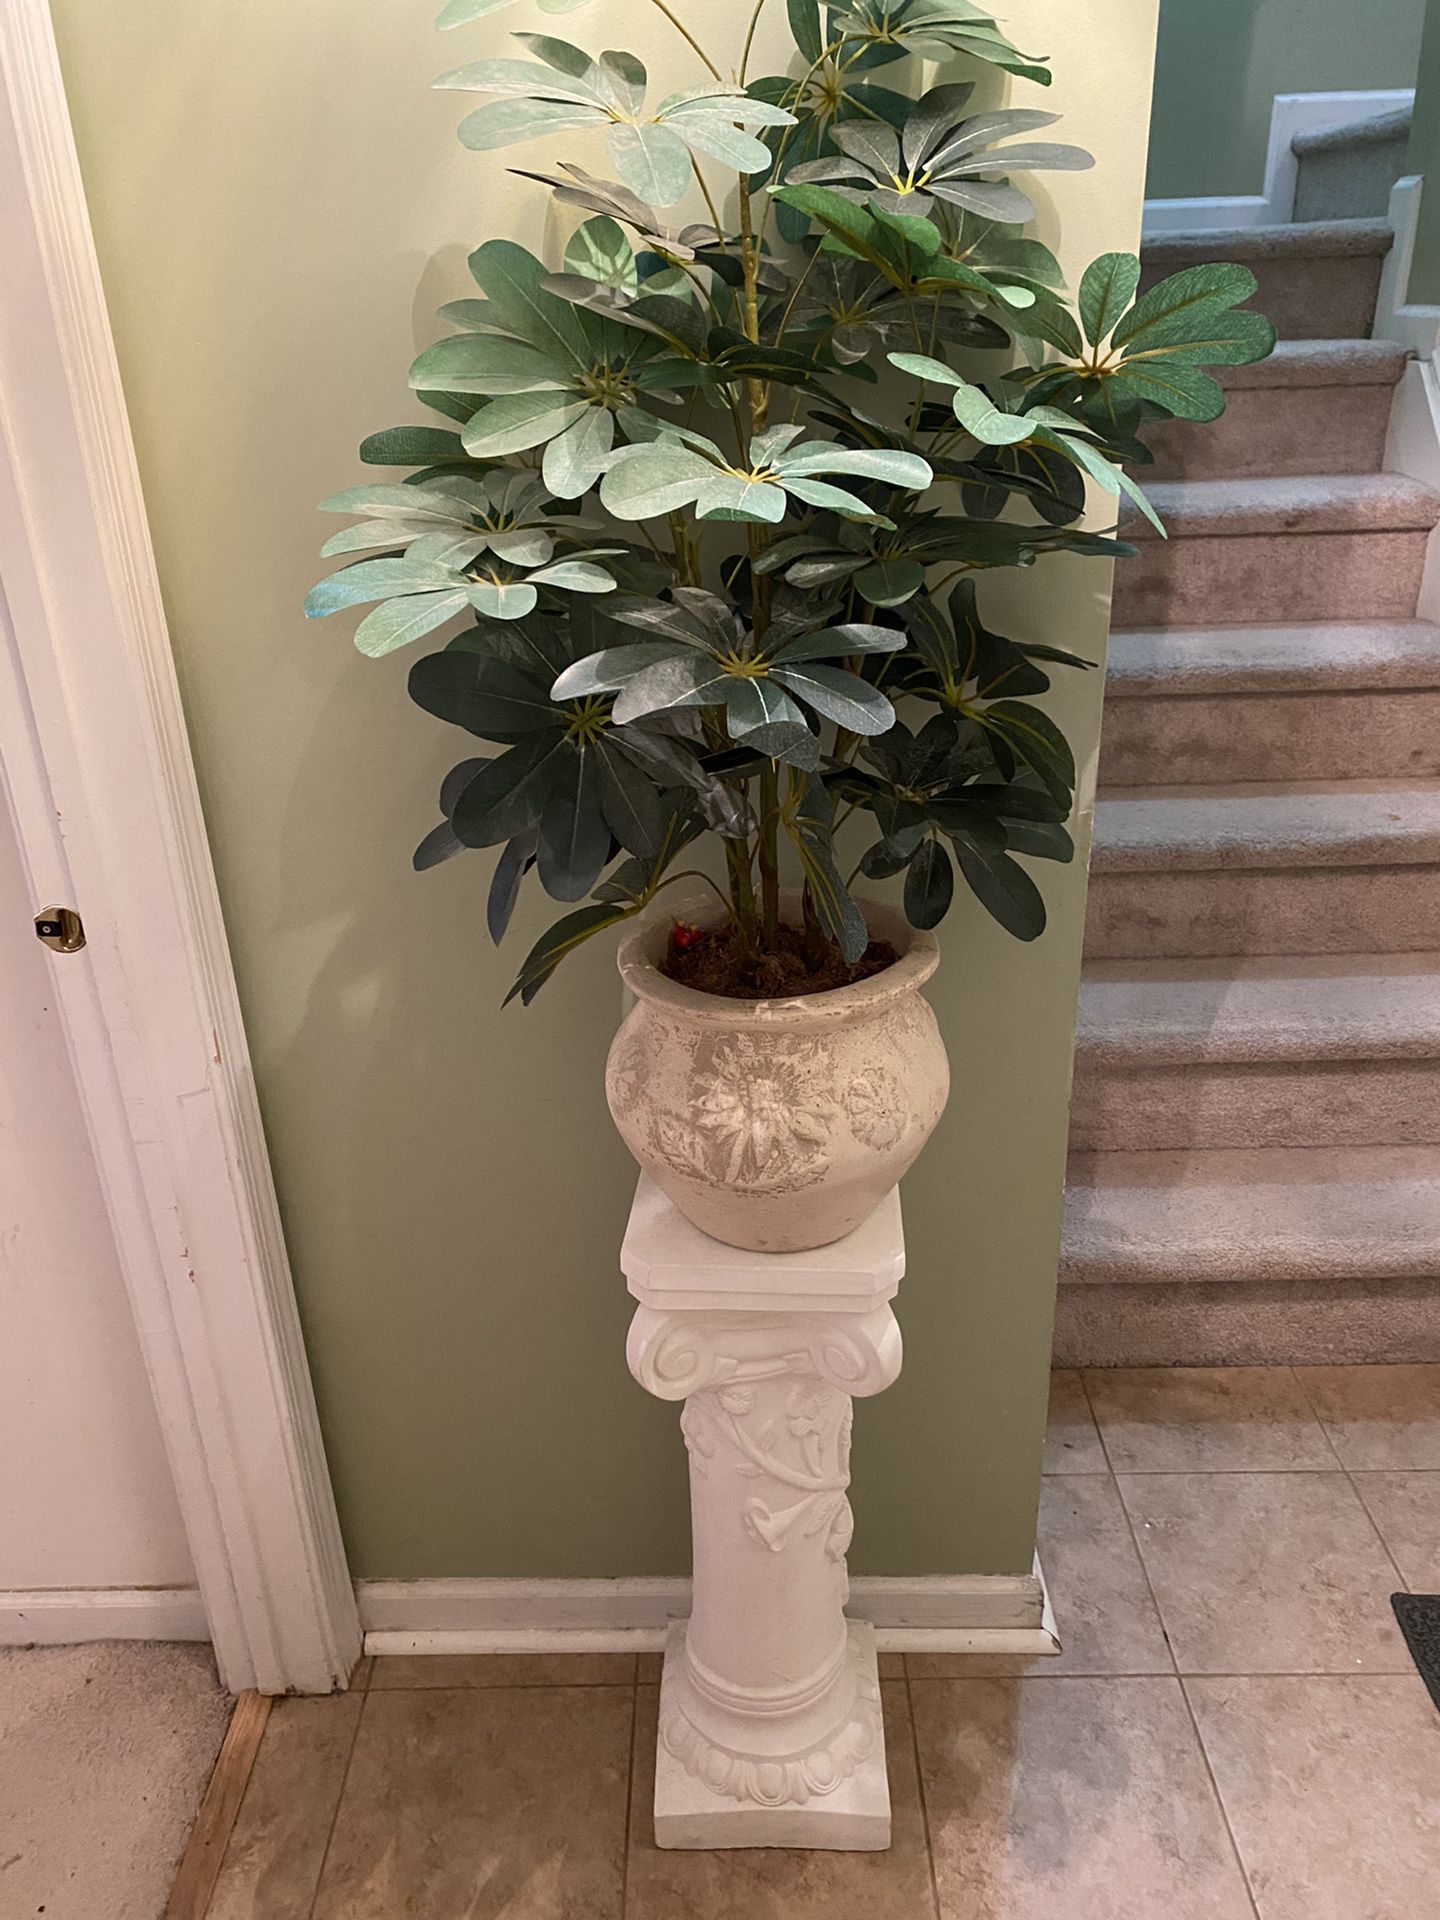 $10 Like New Ceramic Plant Pedestal and Plant